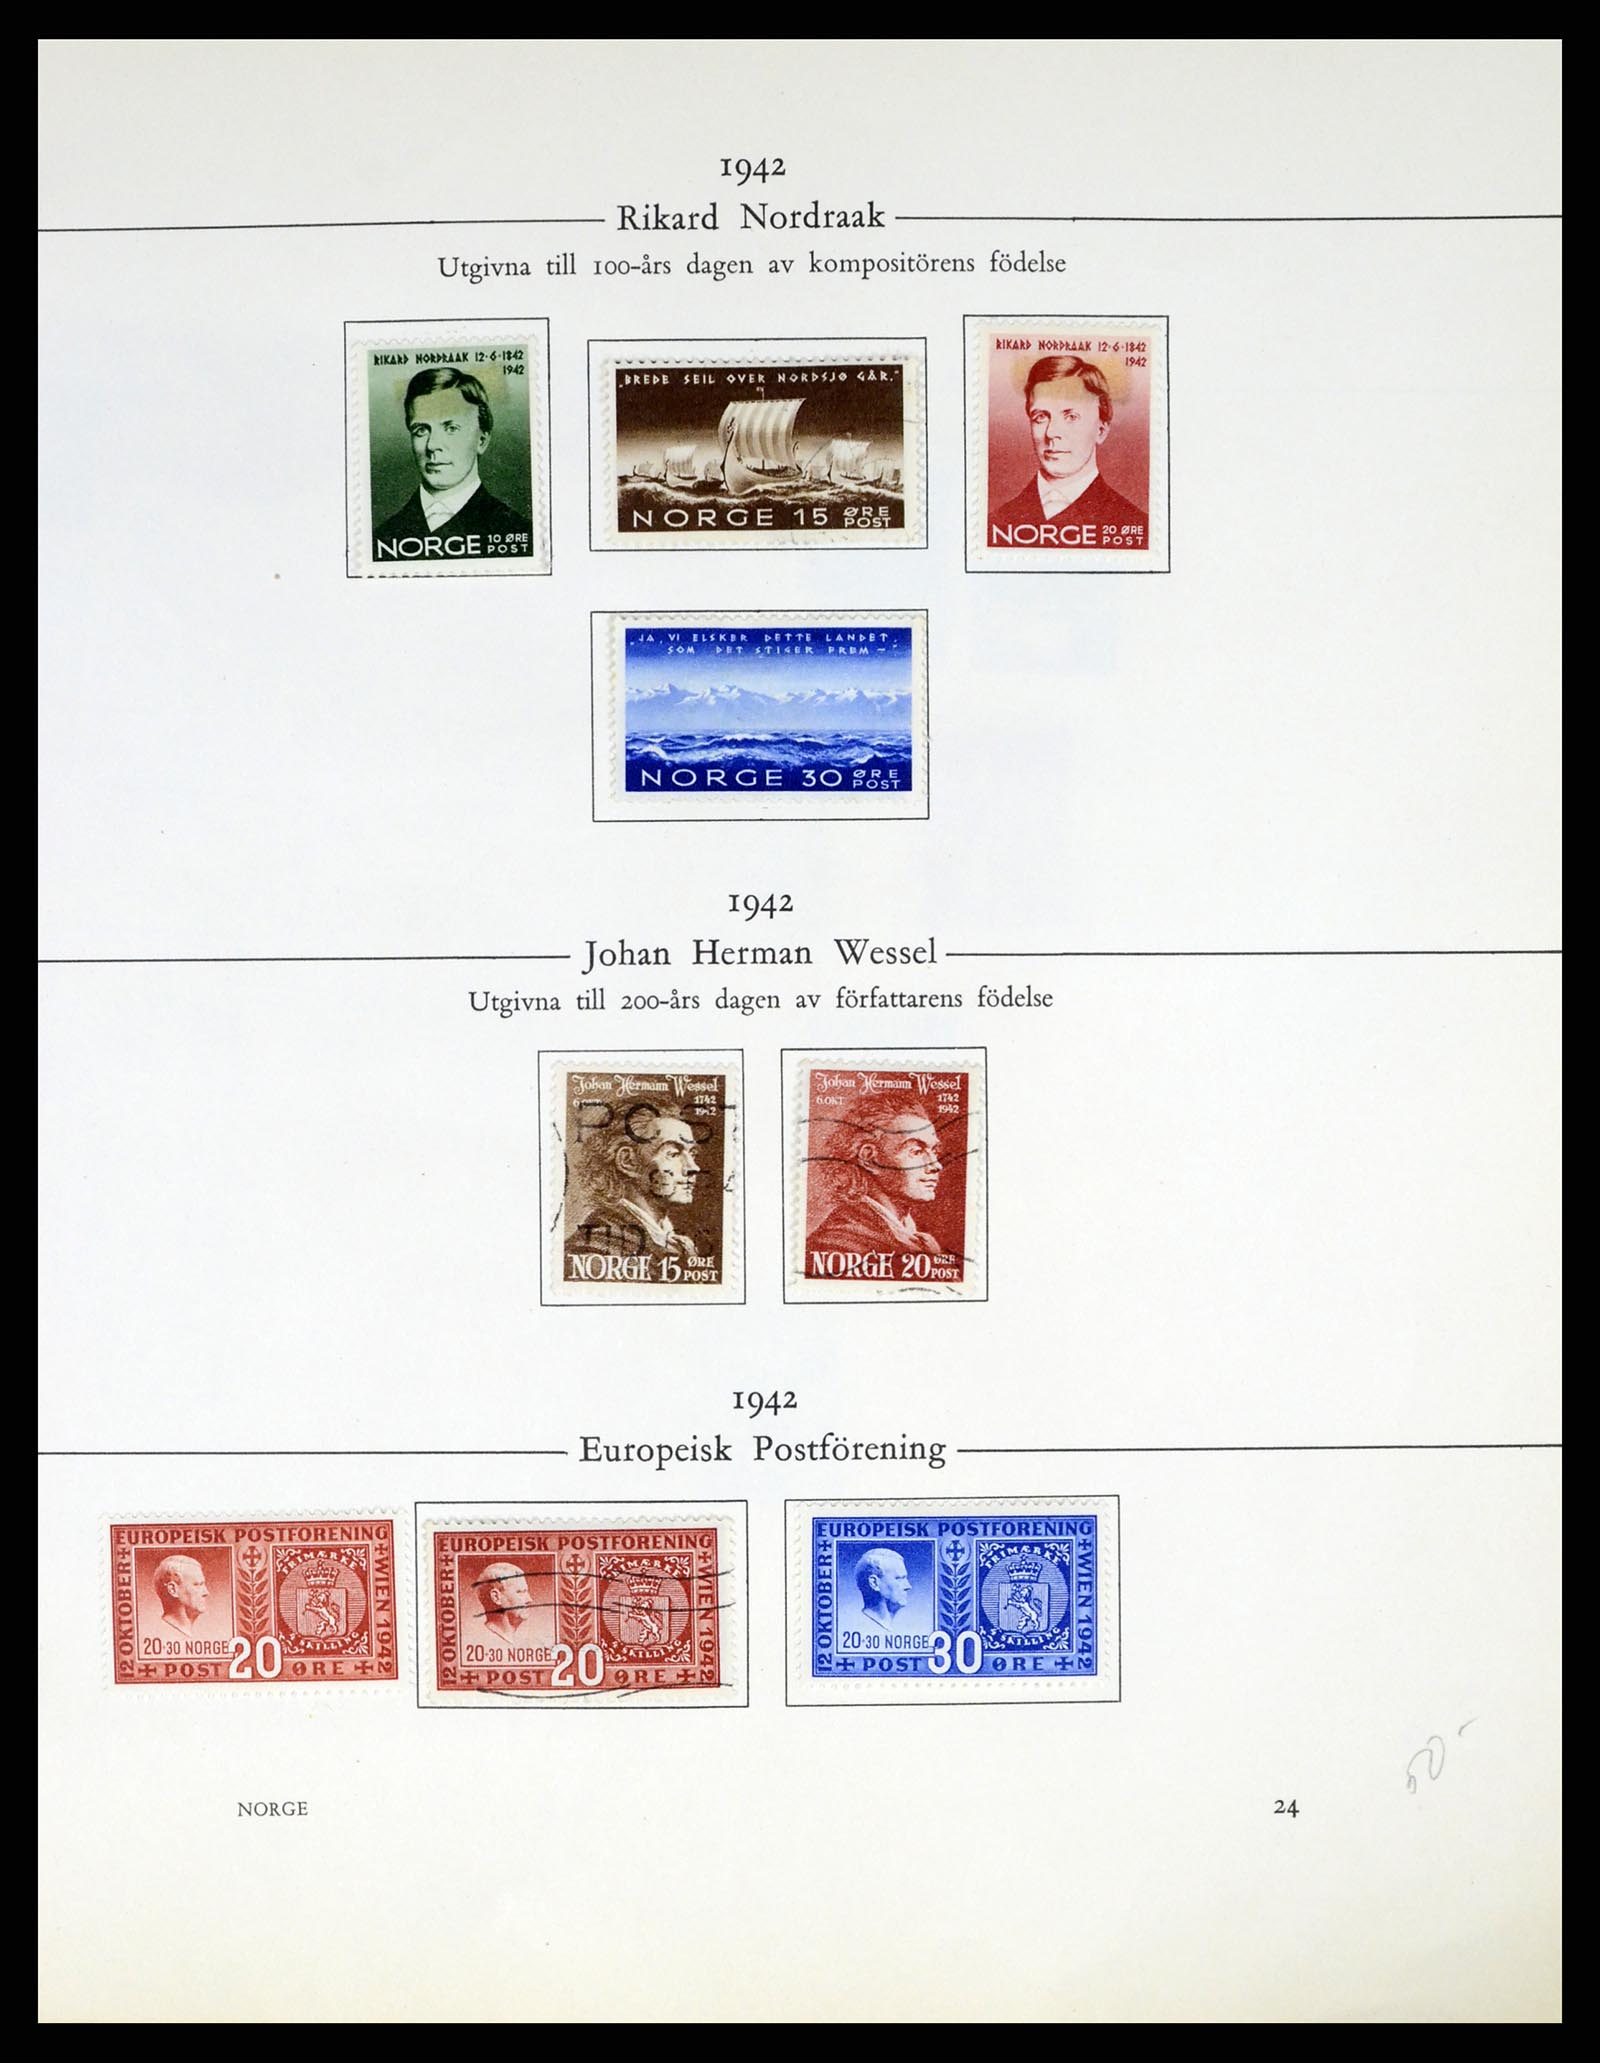 37387 024 - Stamp collection 37387 Scandinavia 1851-1960.